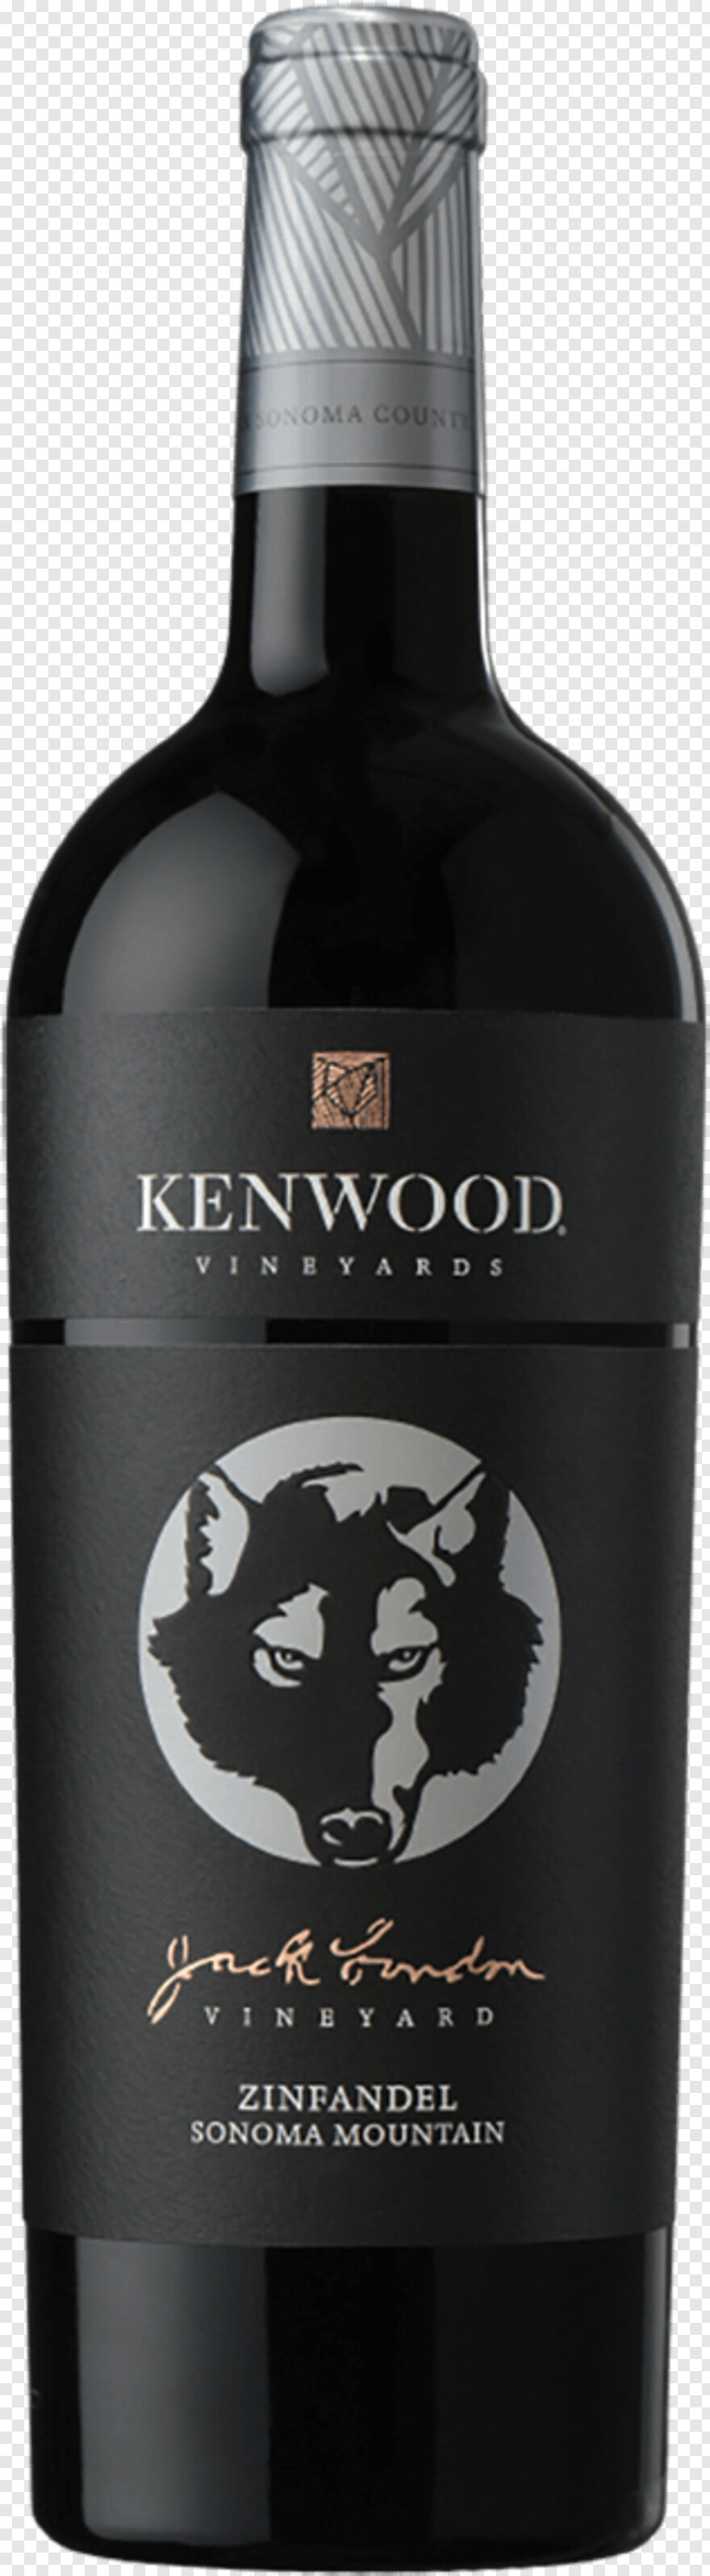 kenwood-logo # 740207